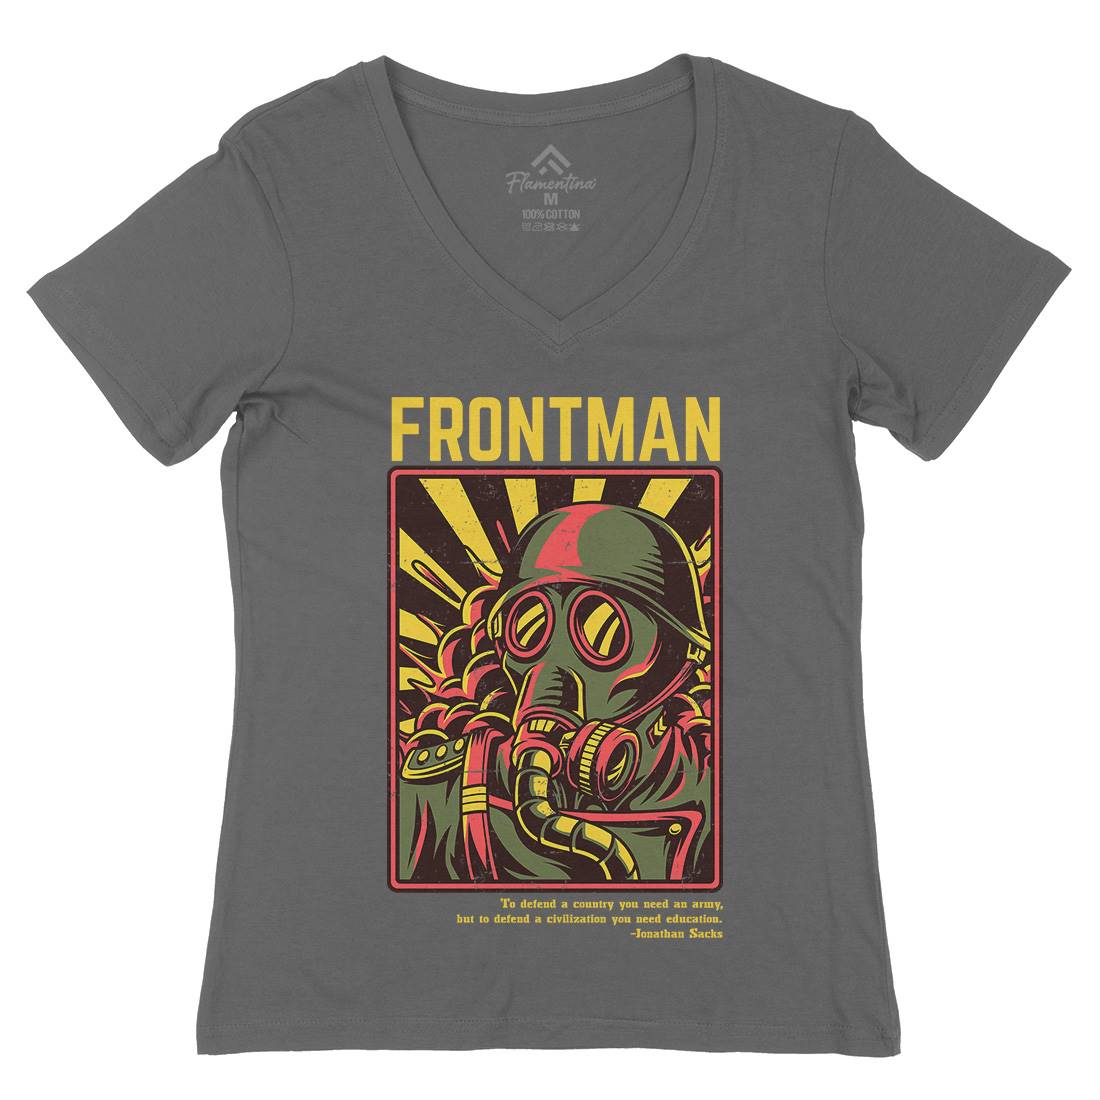 Frontman Womens Organic V-Neck T-Shirt Army D781